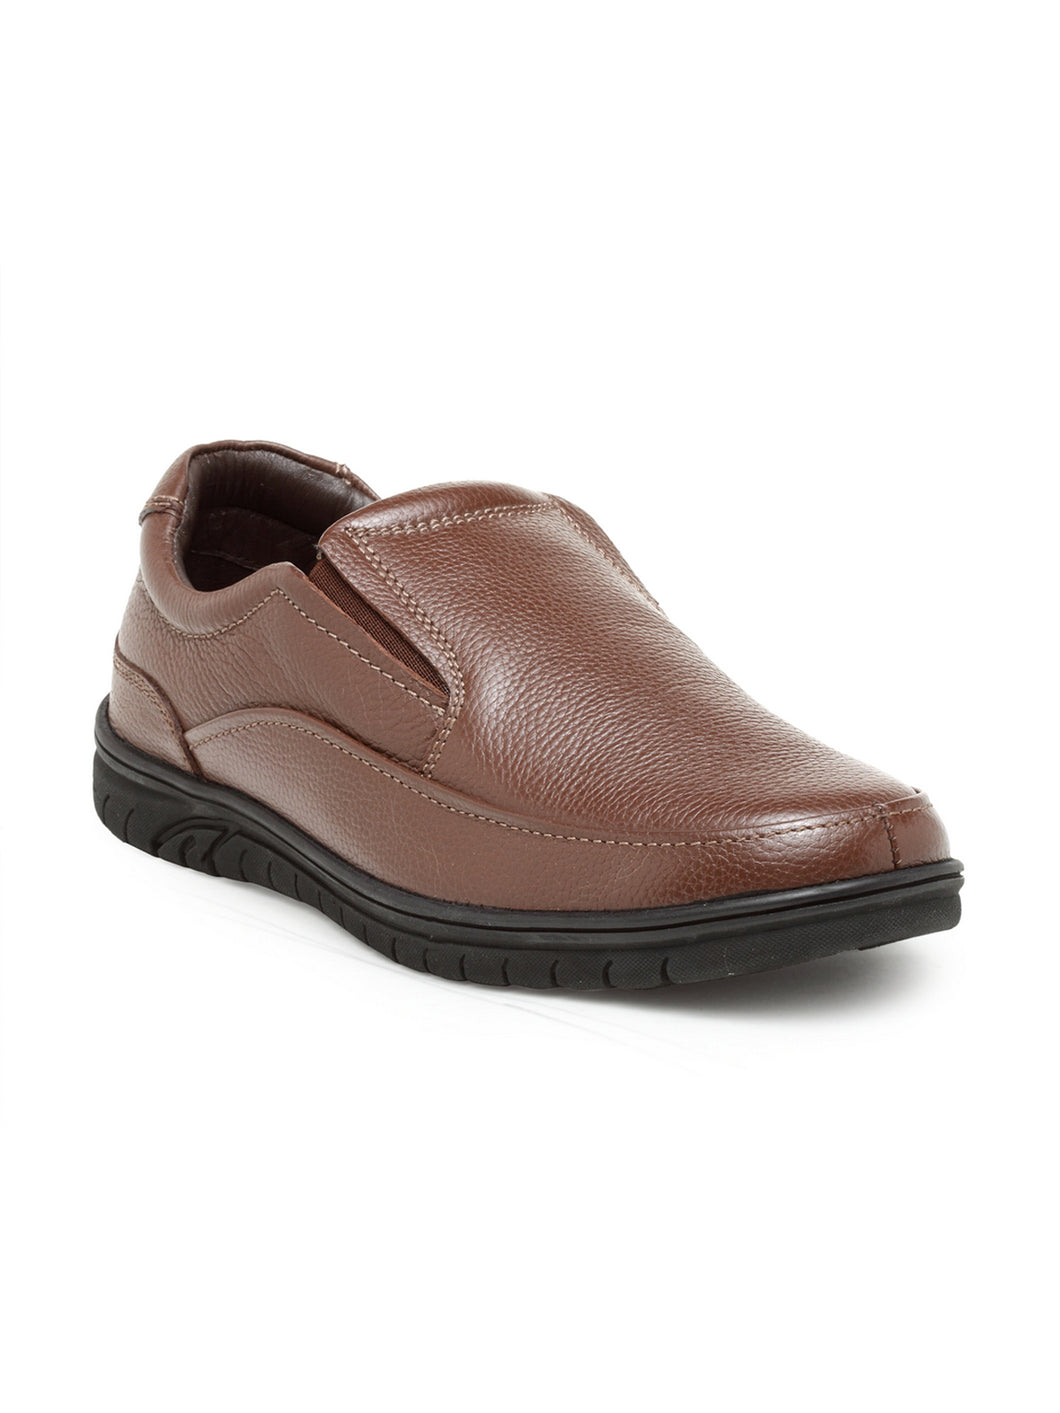 Teakwood Leathers Men's Brown Casual Slip-On Shoes